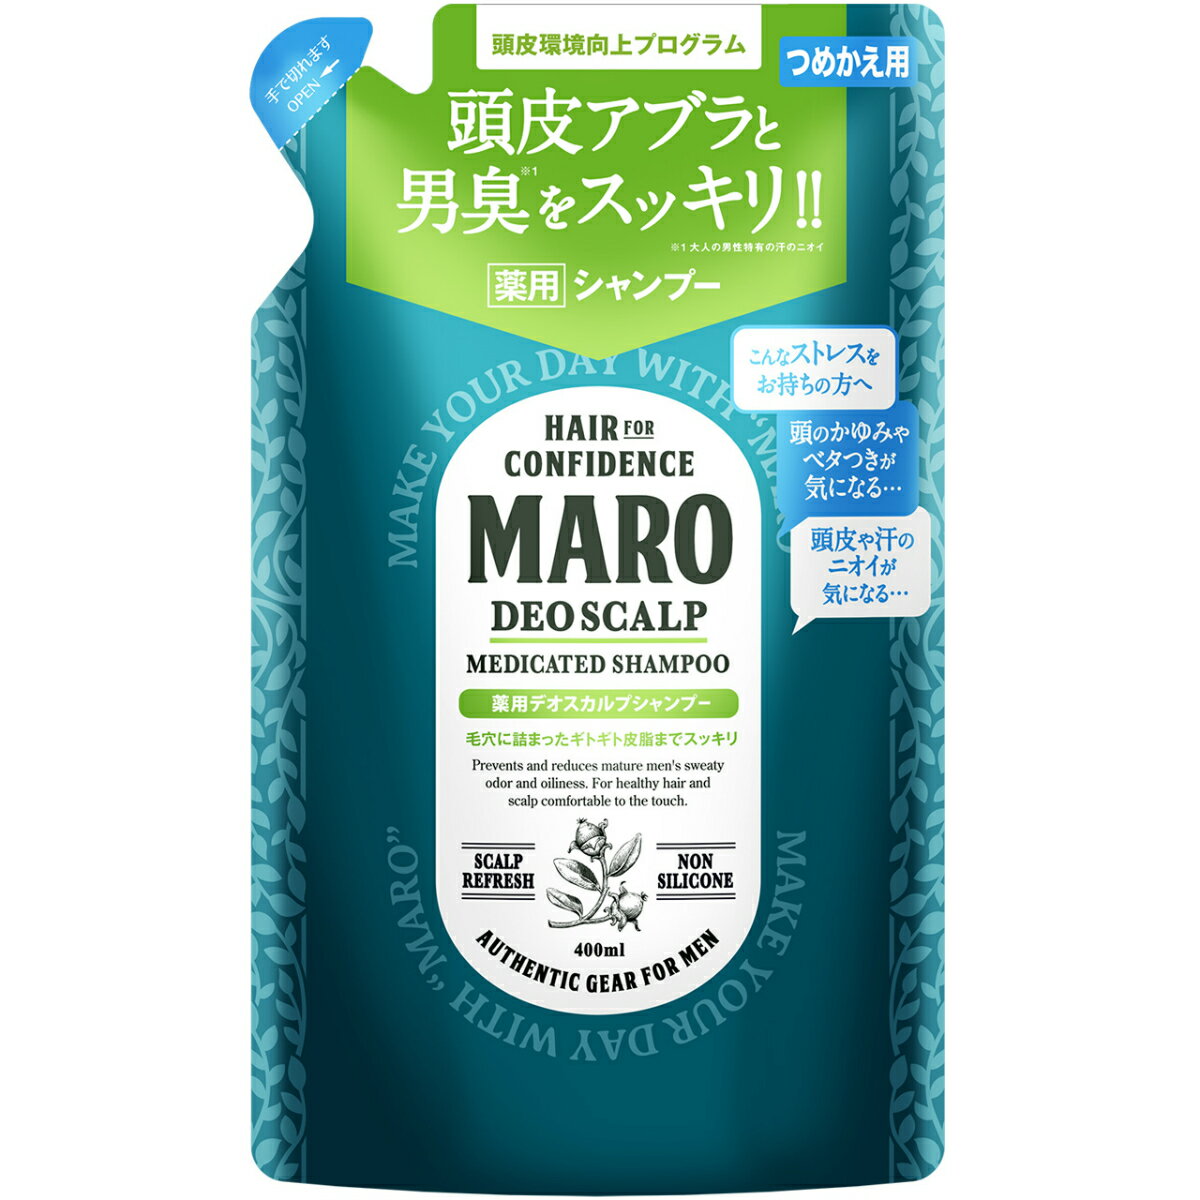 MARO 薬用デオスカルプシャンプー詰替え / 480ml